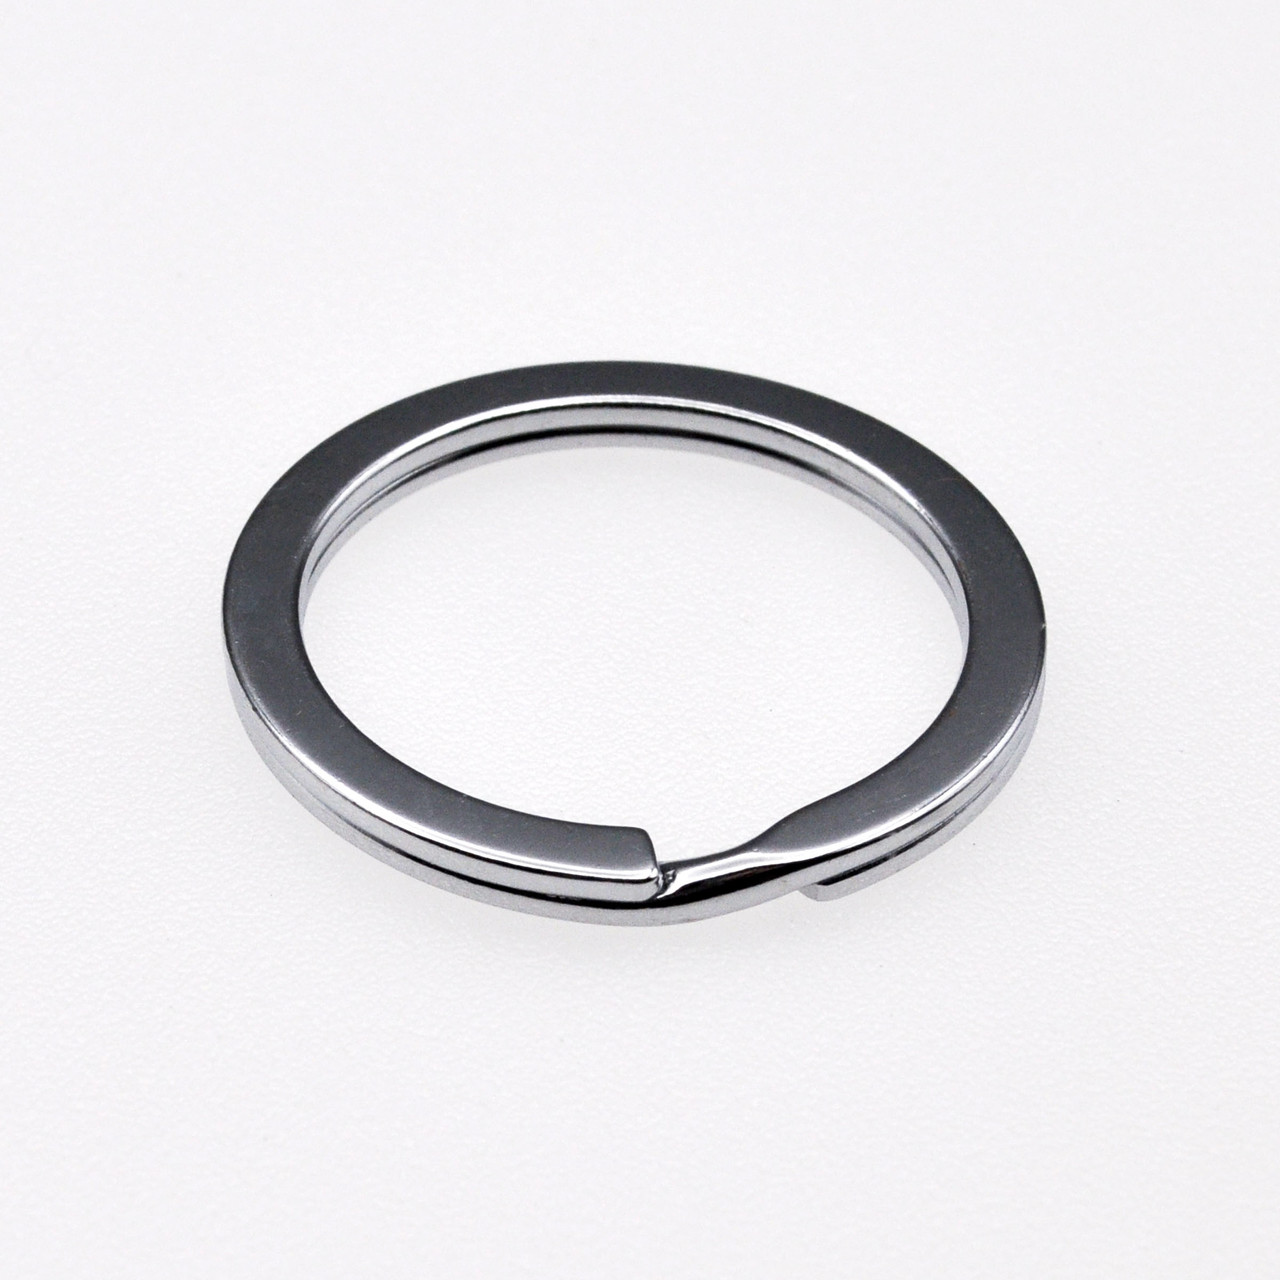 Flat Split Key Ring Nickel-Plated 1-1/4 Inch